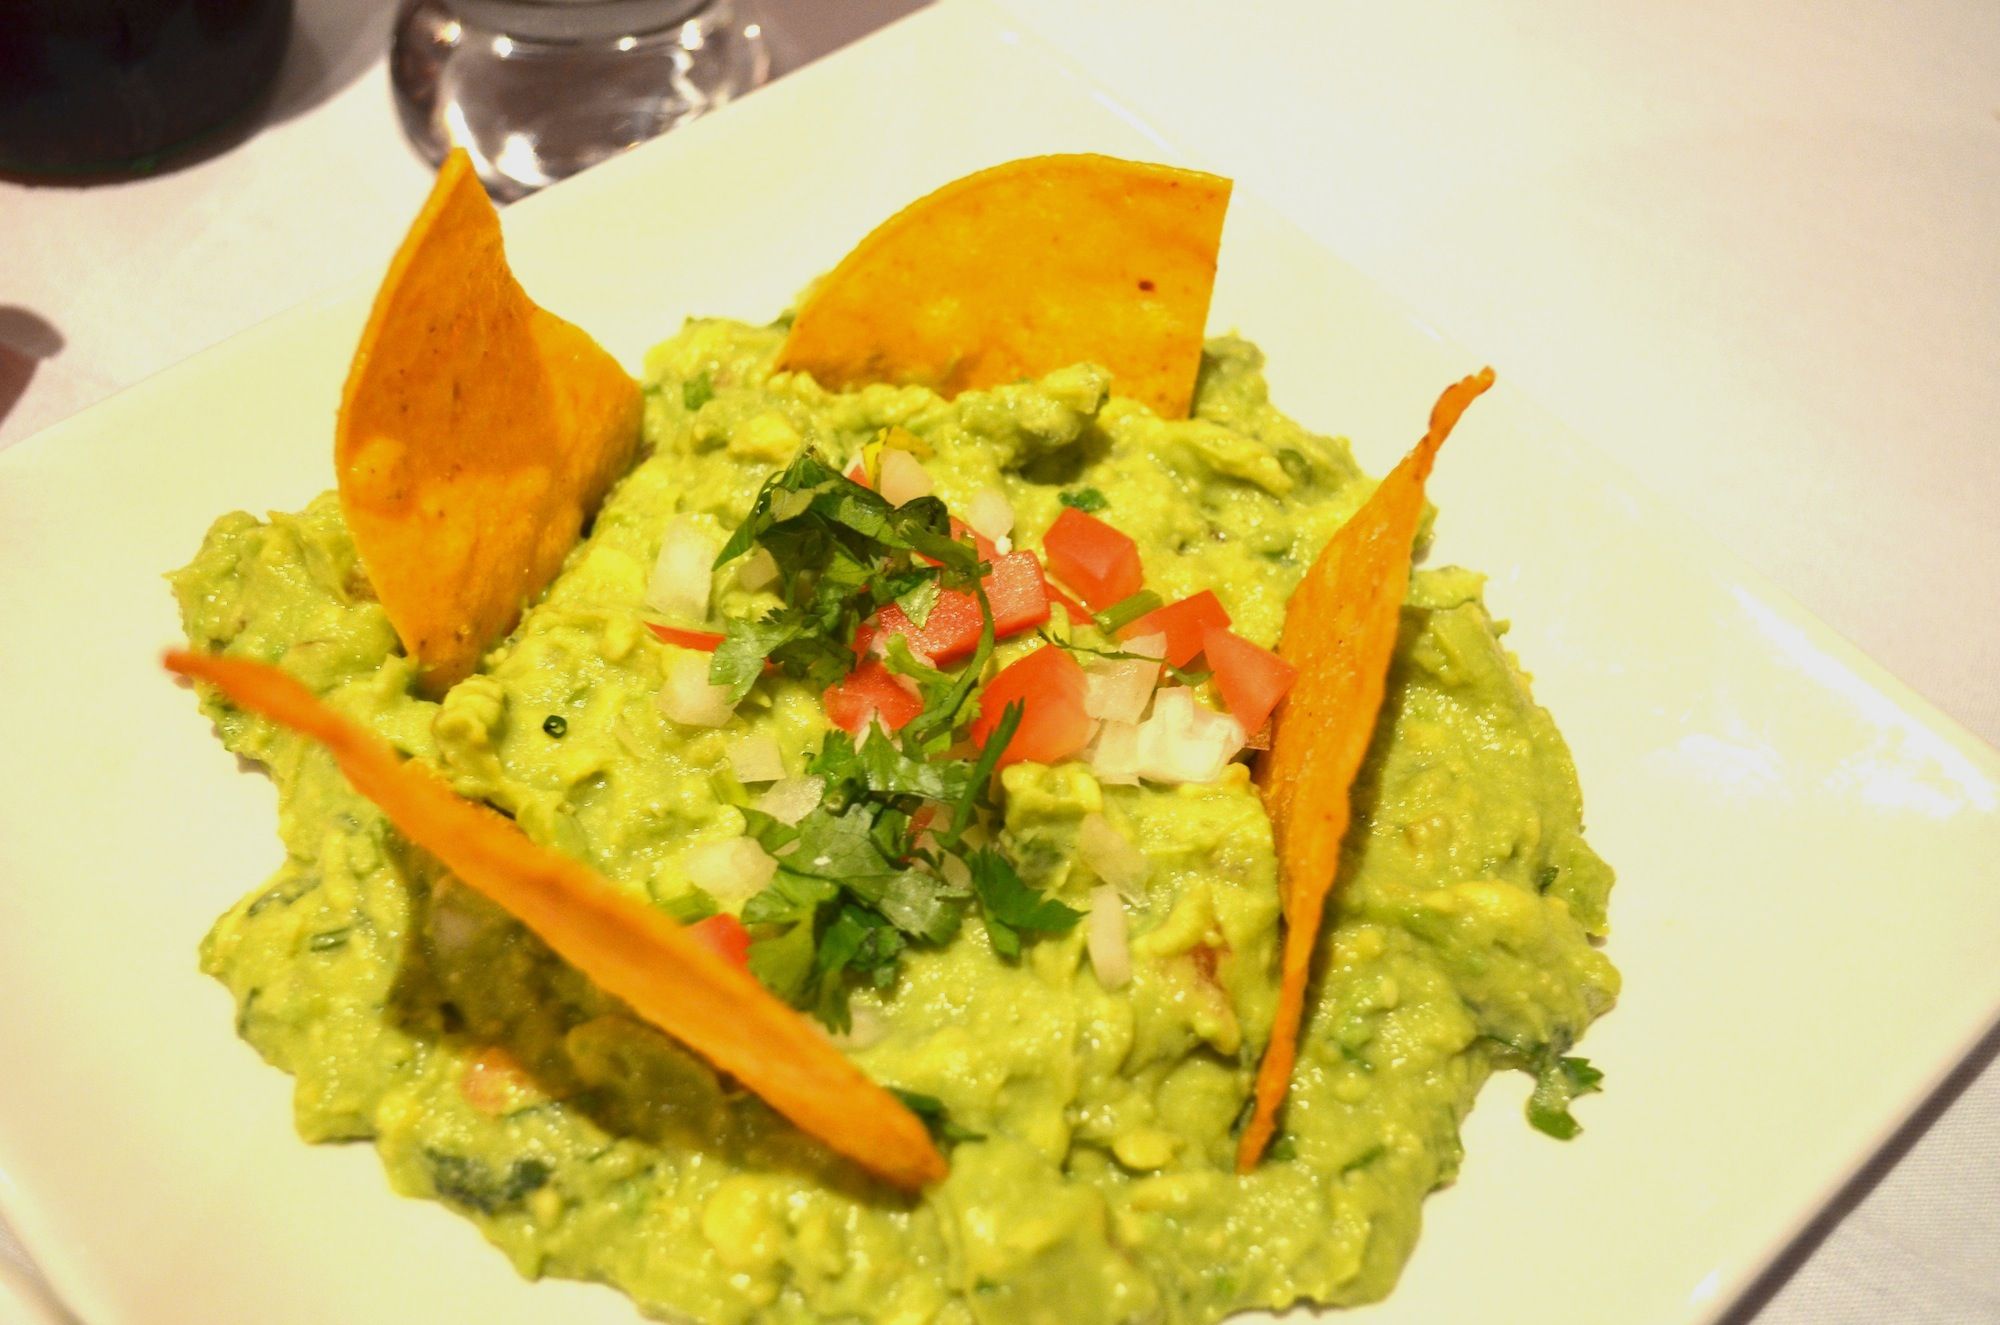 The guacamole. (Photo: Alex Ellefson / Sheepshead Bites)